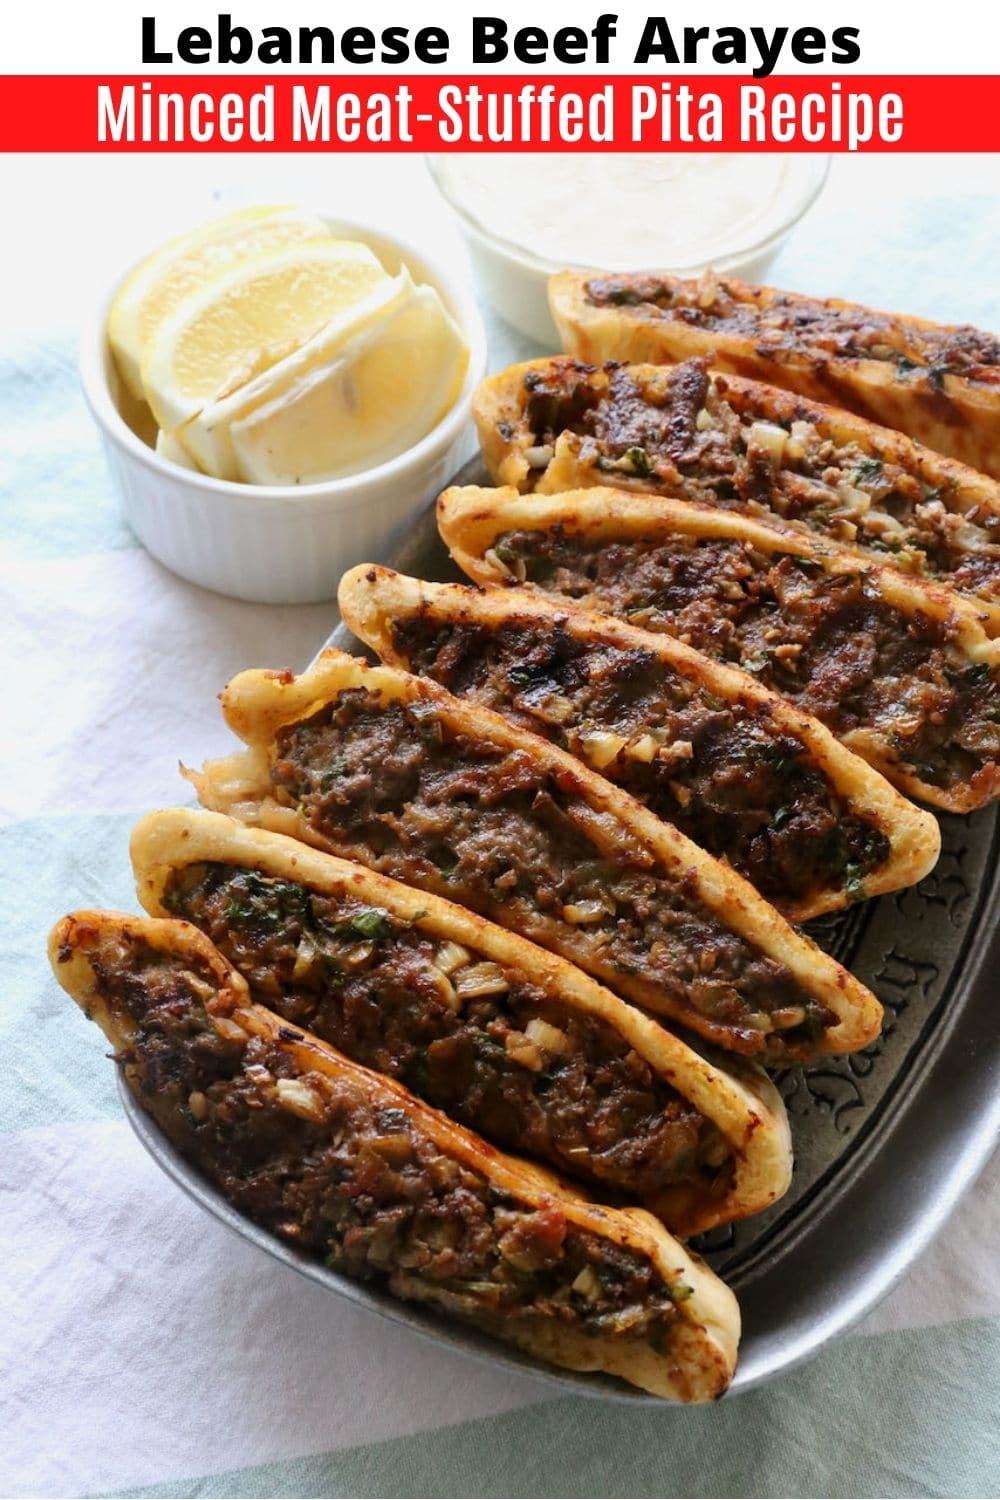 Lebanese Spiced Minced Beef Stuffed Pita Arayes Recipe - dobbernationLOVES